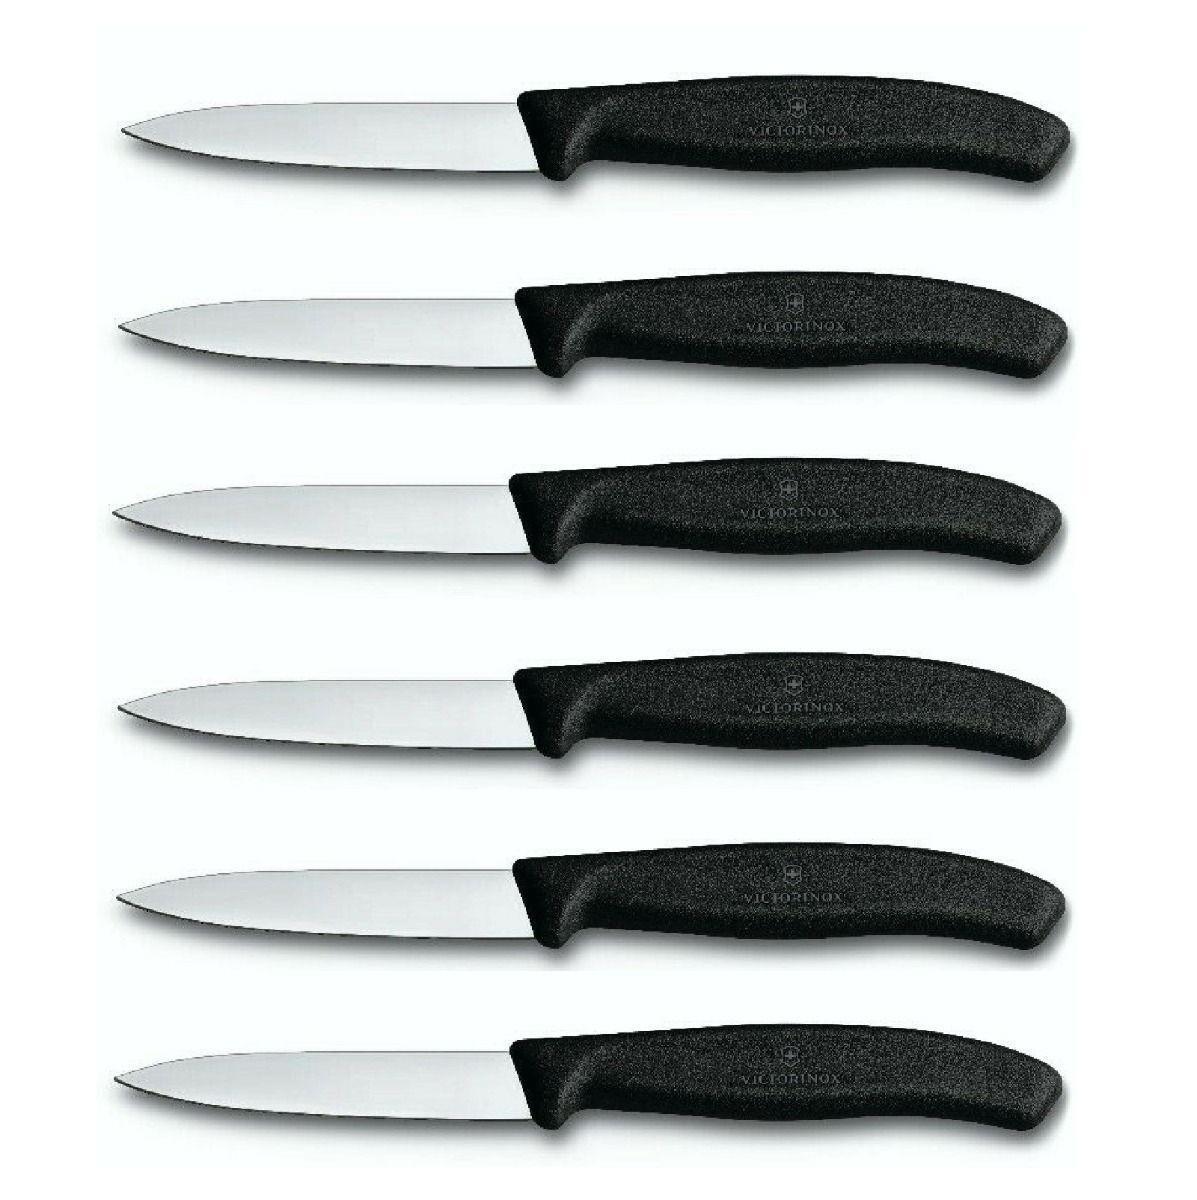 VICTORINOX PARING KNIFE POINTED TIP STRAIGHT BLADE 8cm SET of 6 - Black